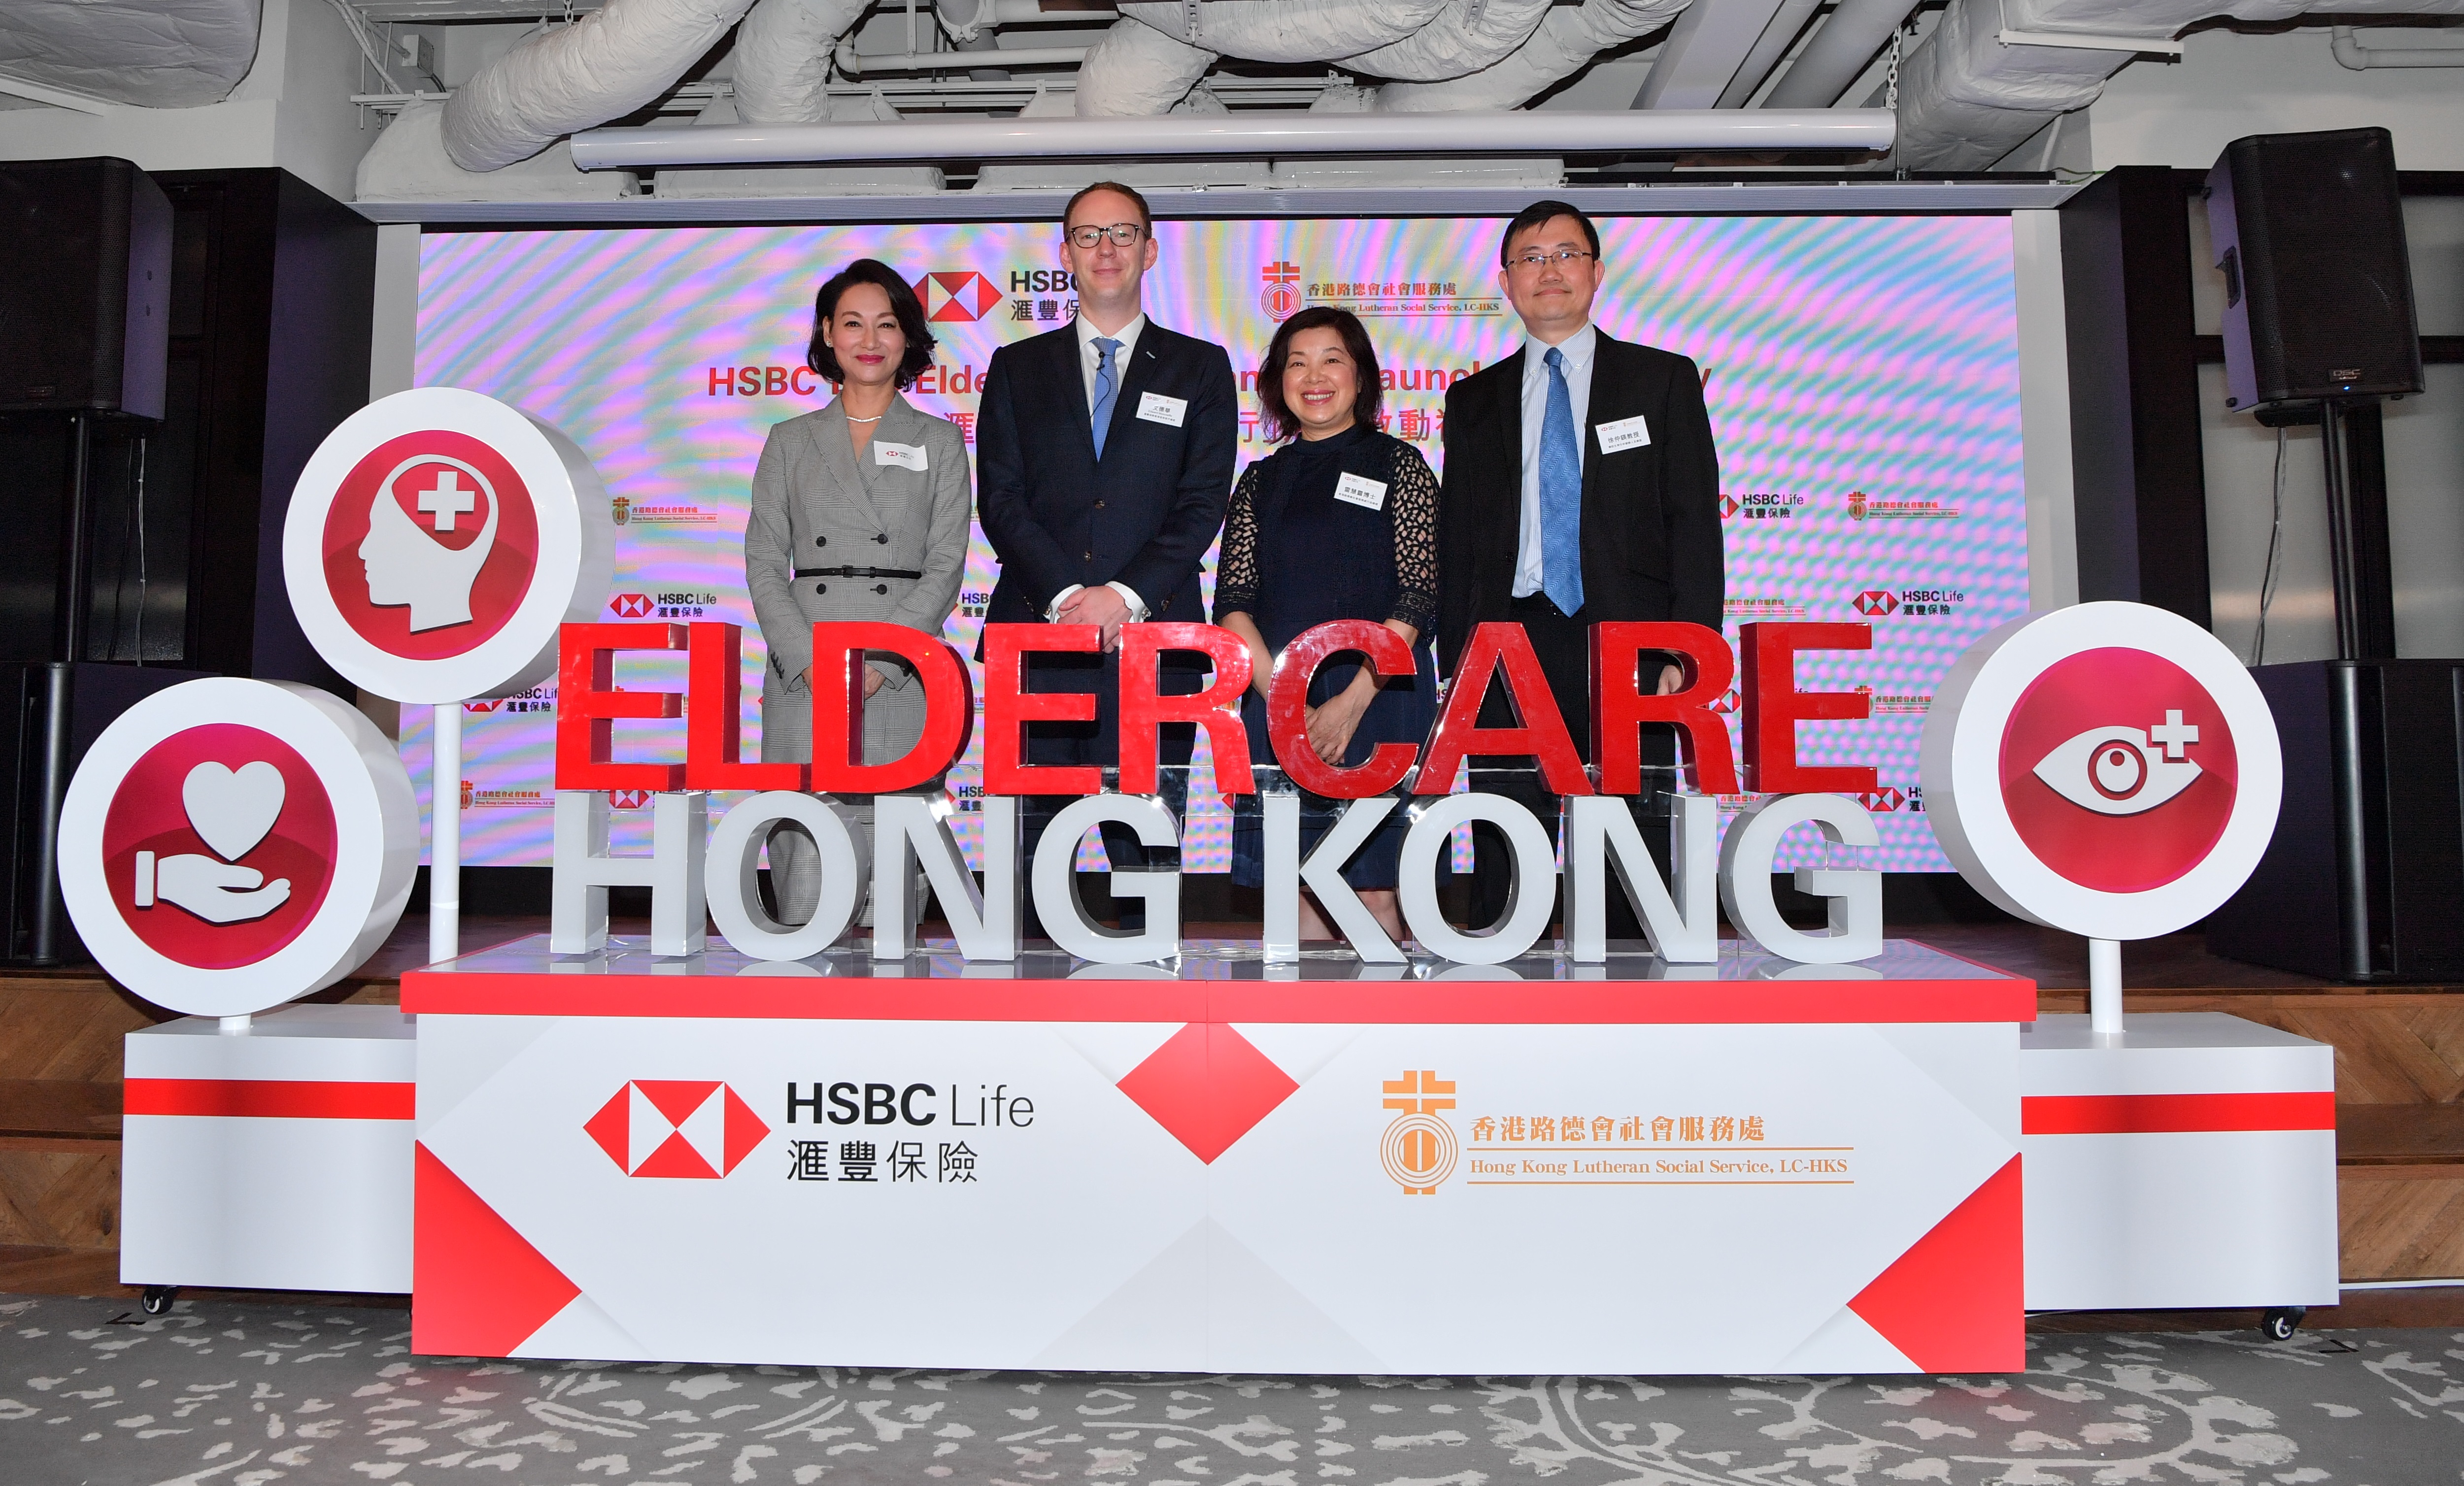 HKLSS and HSBC Life Eldercare Programme